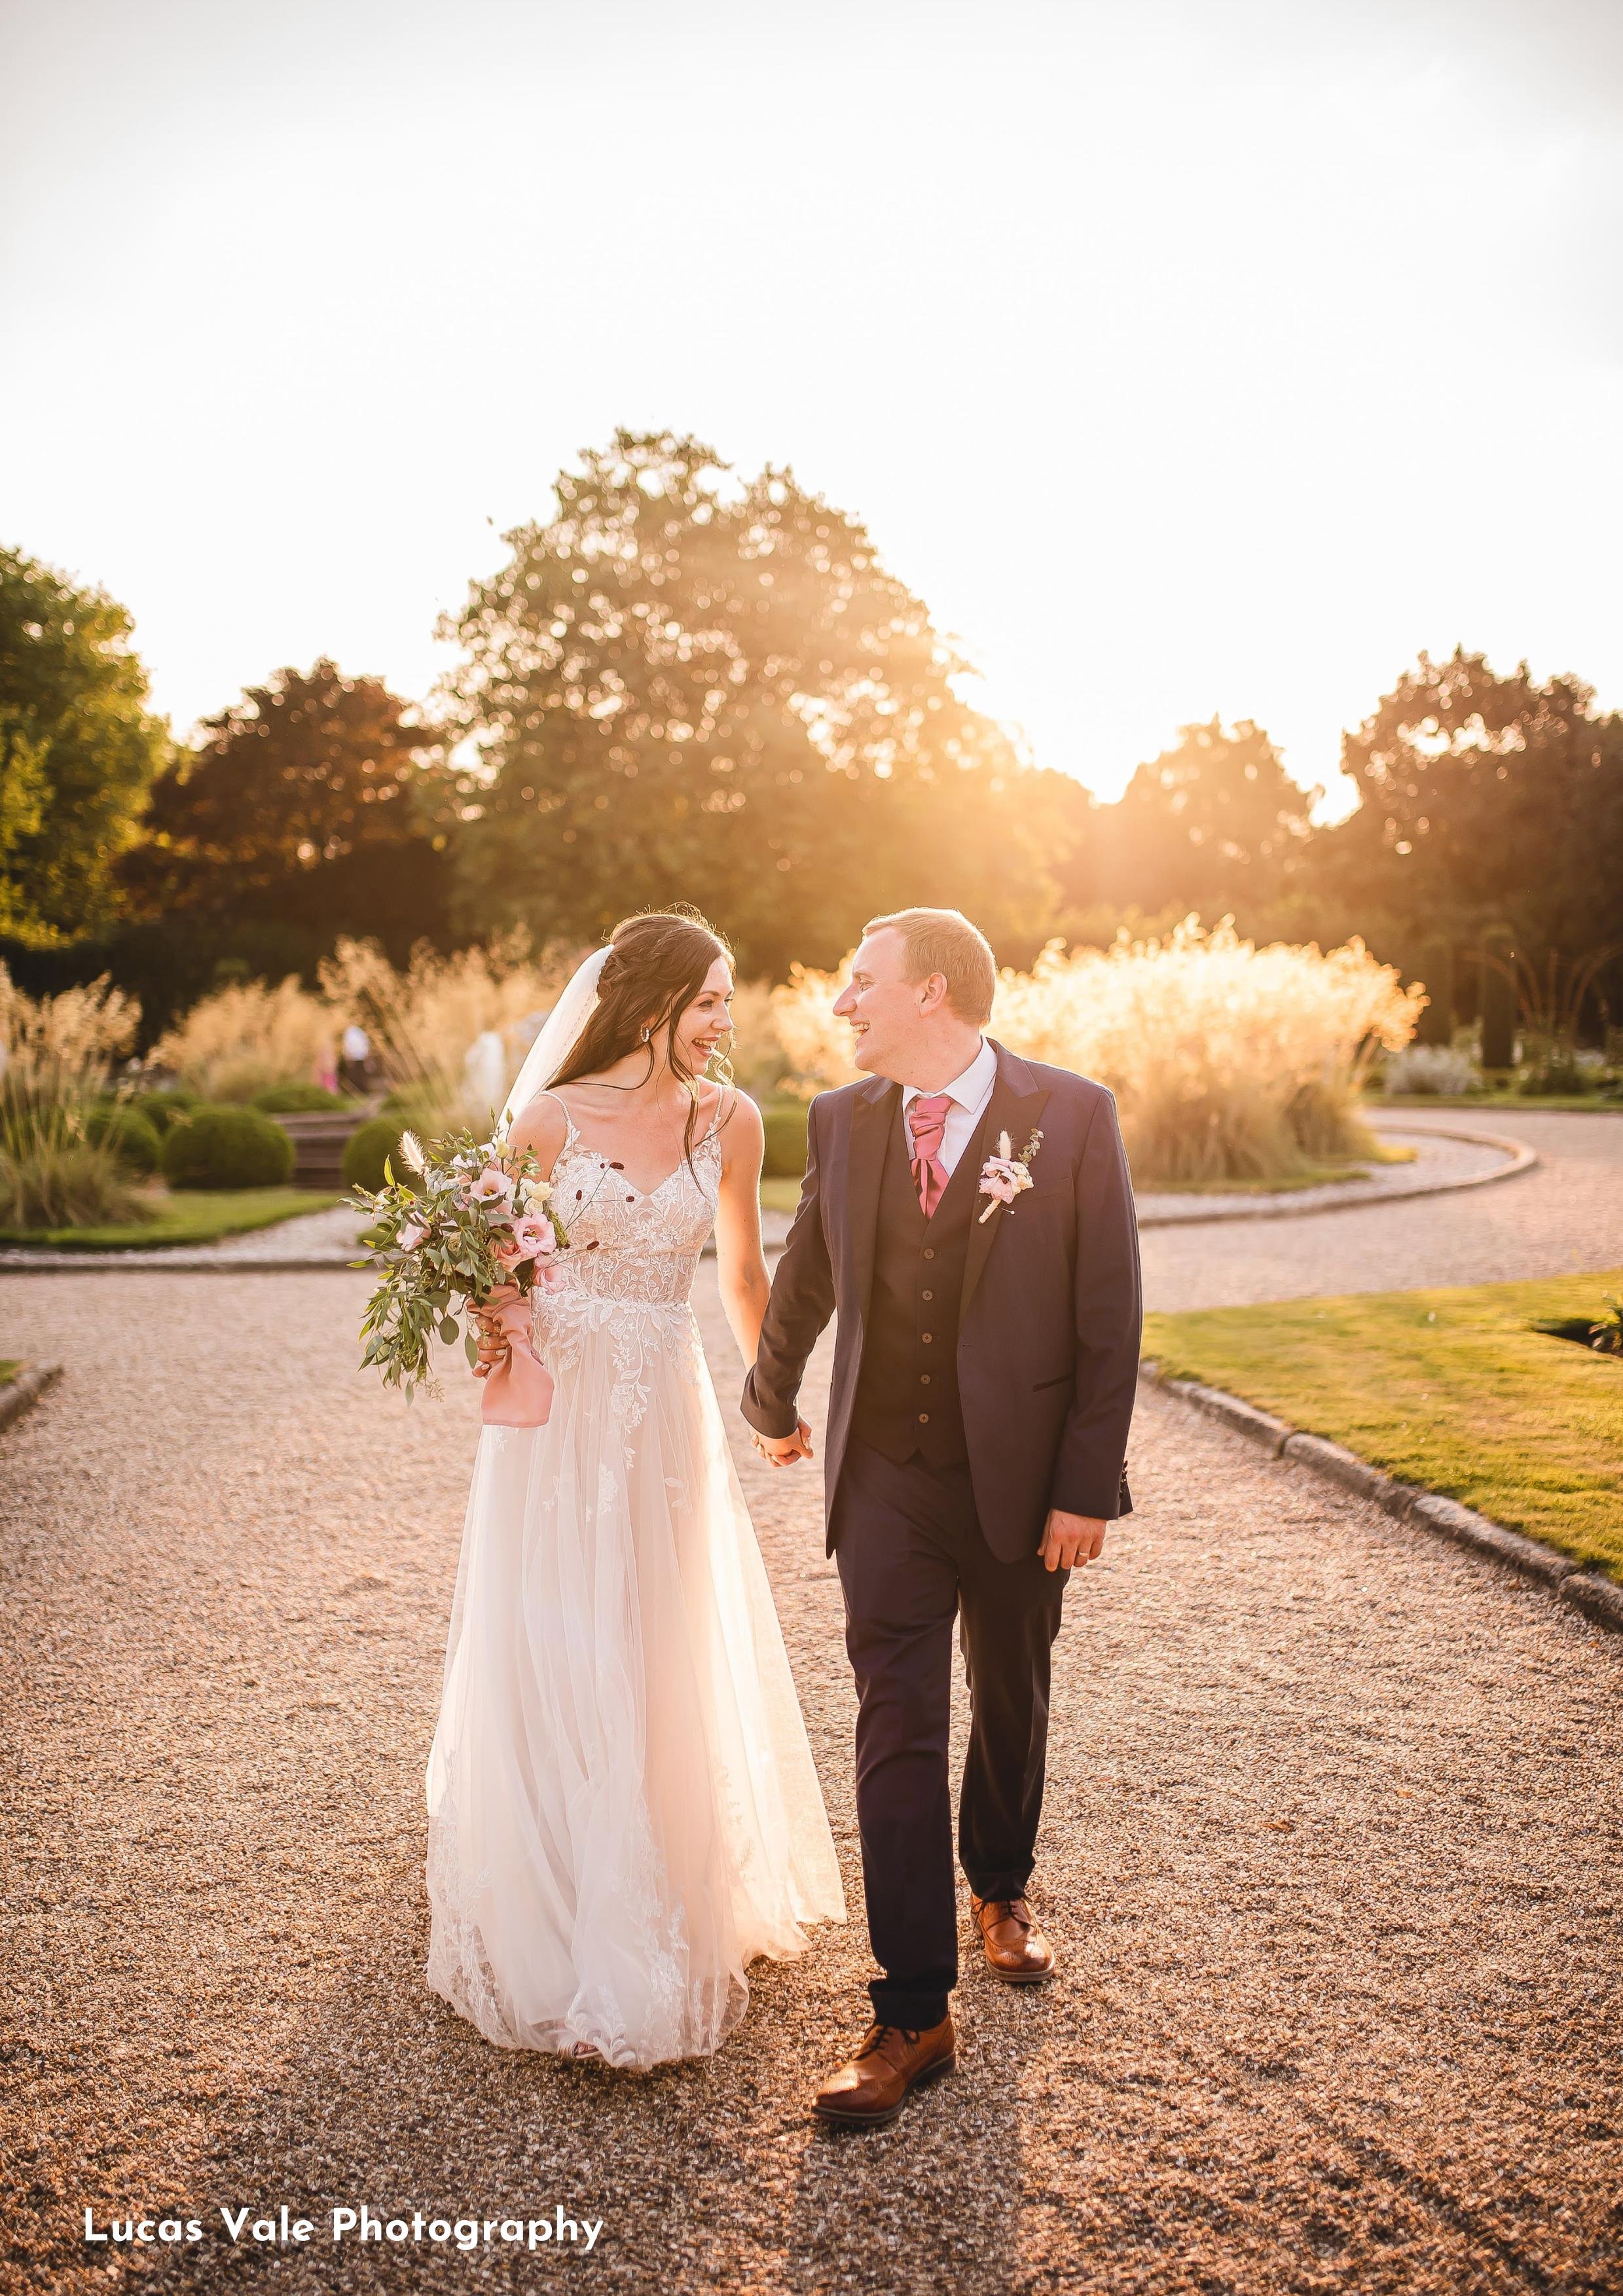 Lucas Vale Photography-min Weddings at Trentham Gardens.jpg